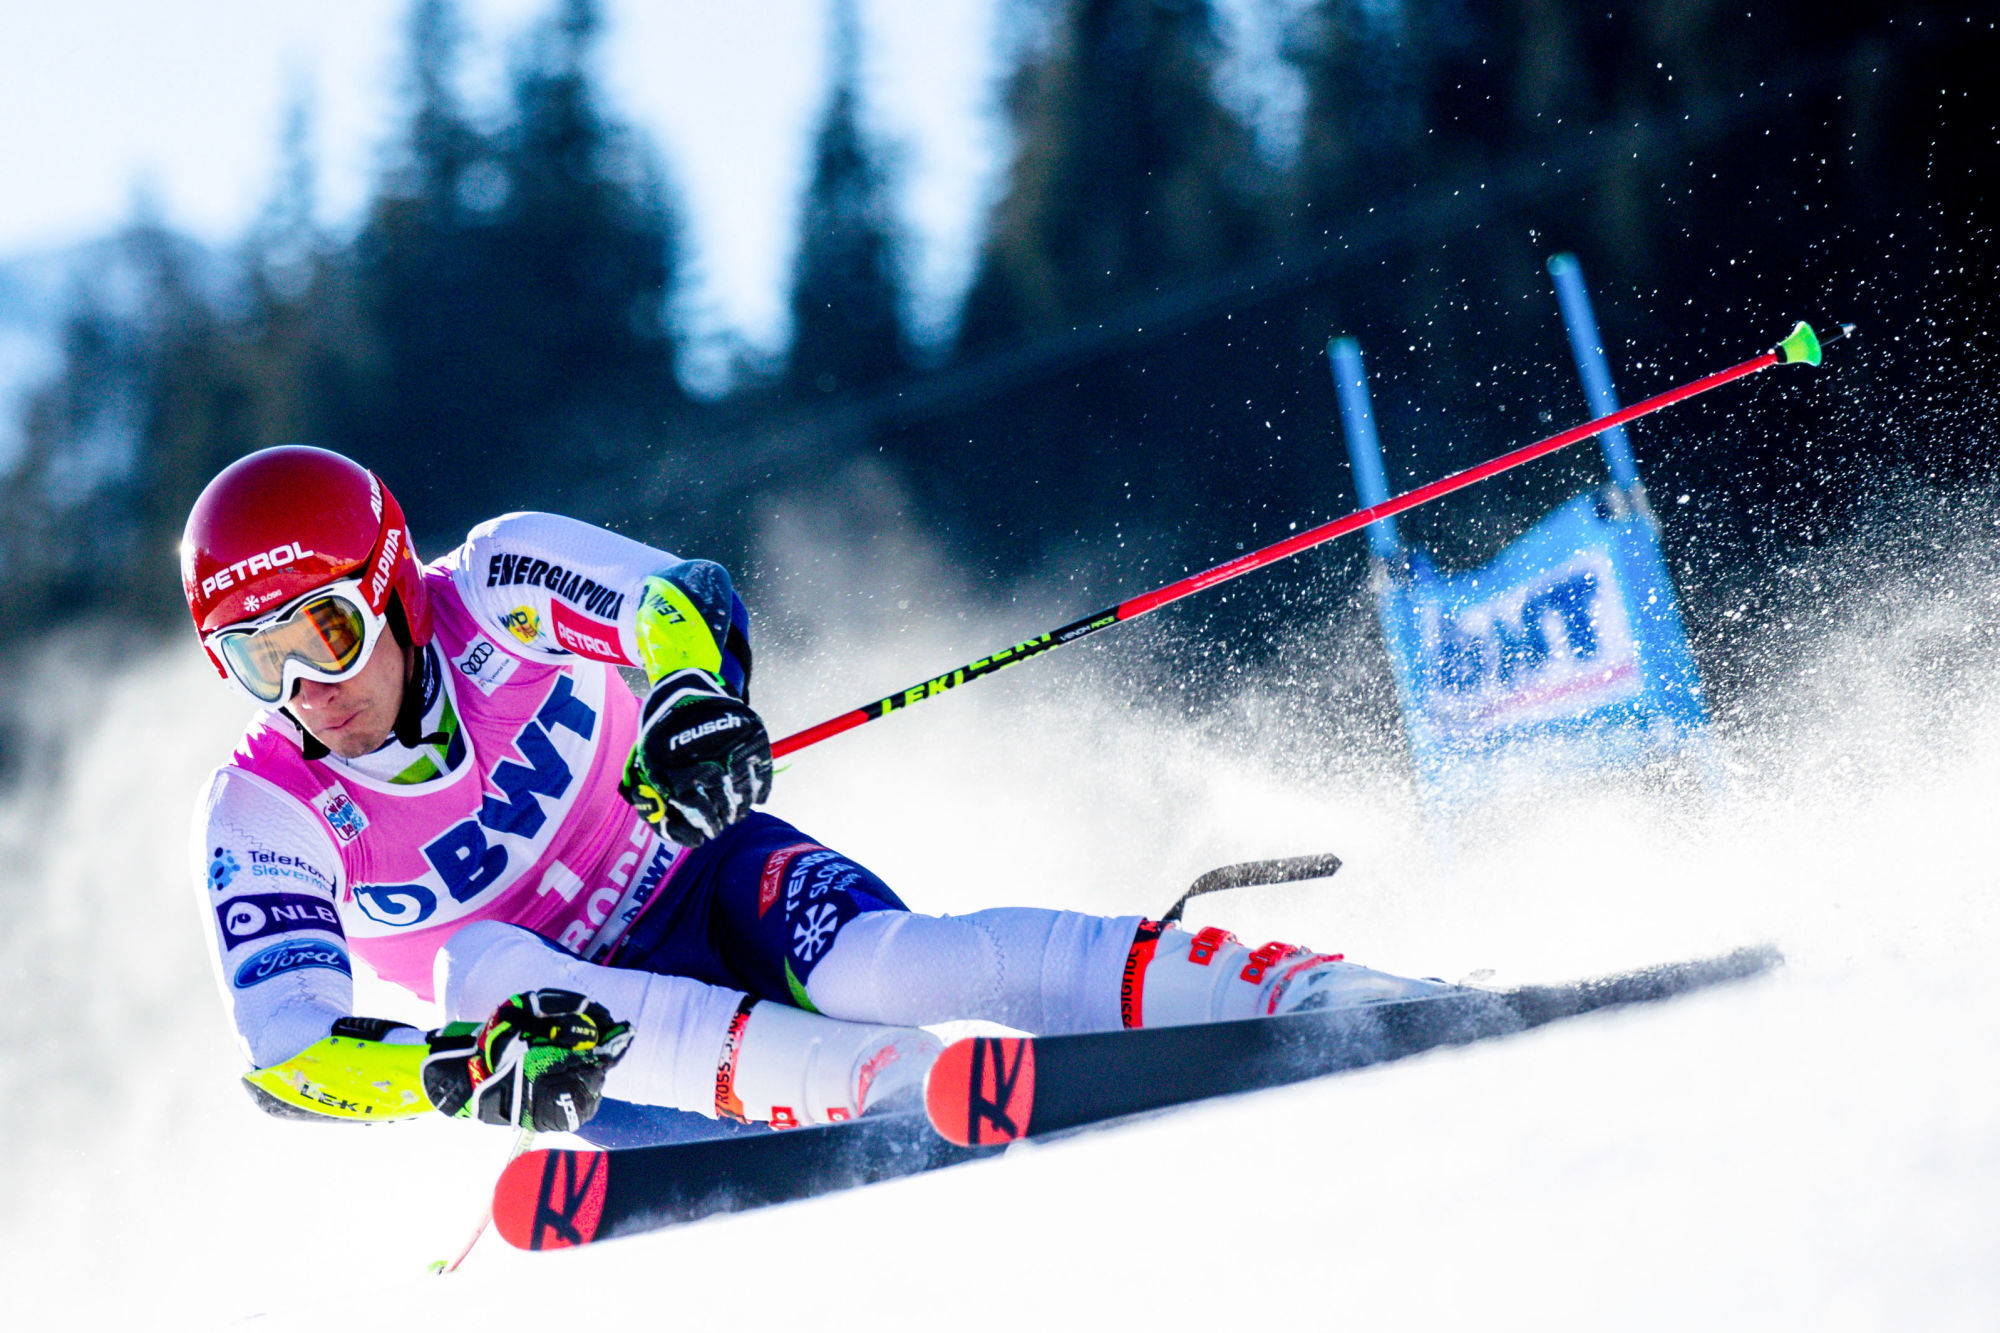 ADELBODEN,SWITZERLAND,11.JAN.20 - ALPINE SKIING - FIS World Cup, giant slalom, men. Image shows Zan Kranjec (SLO). Photo: GEPA pictures/ Matic Klansek 

Photo by Icon Sport - Adelboden (Suisse)